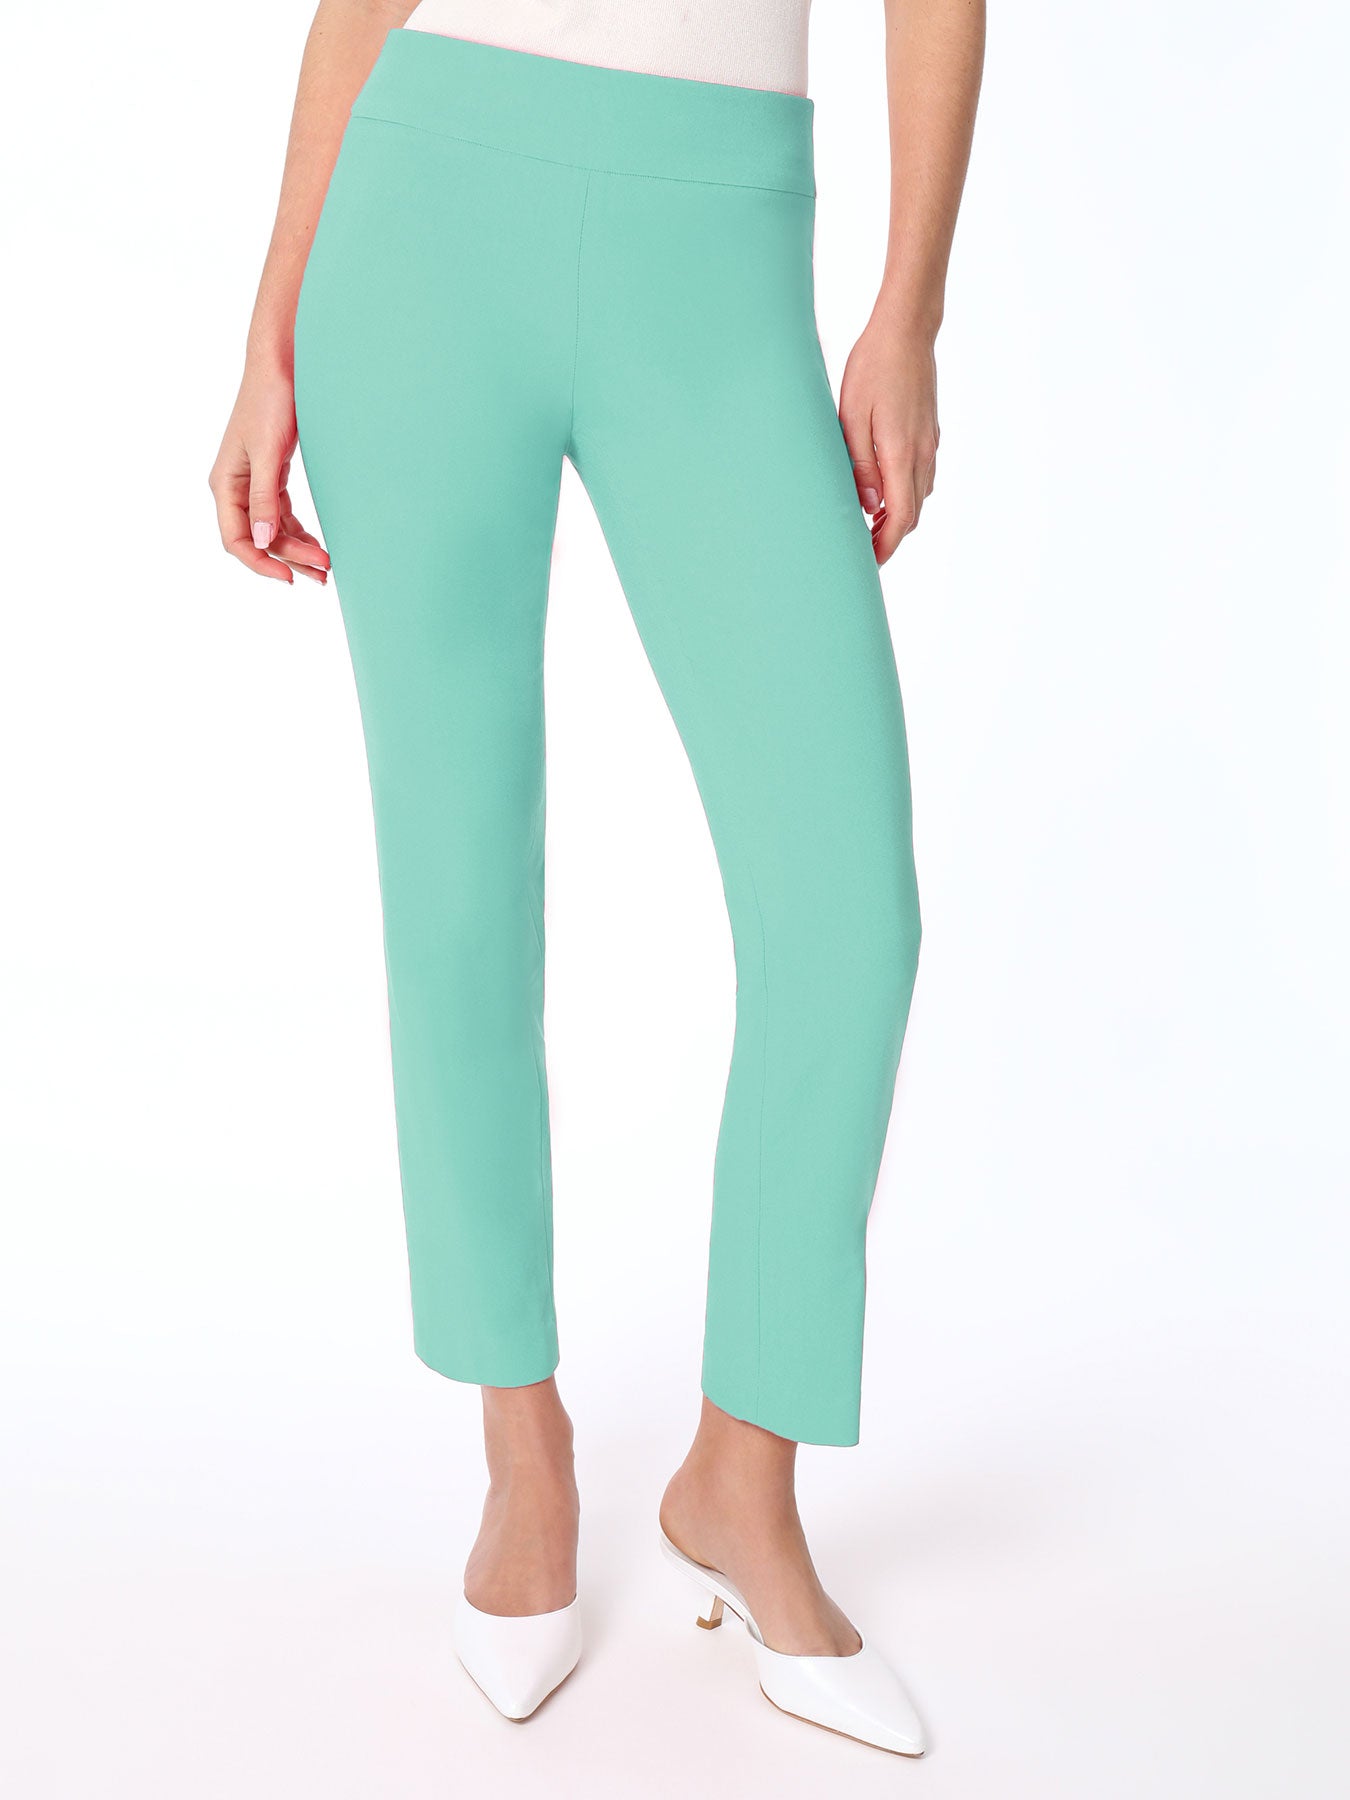 Capris Modelutti 2023 England Style Fashion Side Of Zipper Drawstring  Winter Harem Pants Women Pantalones Mujer Pantalon Femme Trousers From  Omky, $26.35